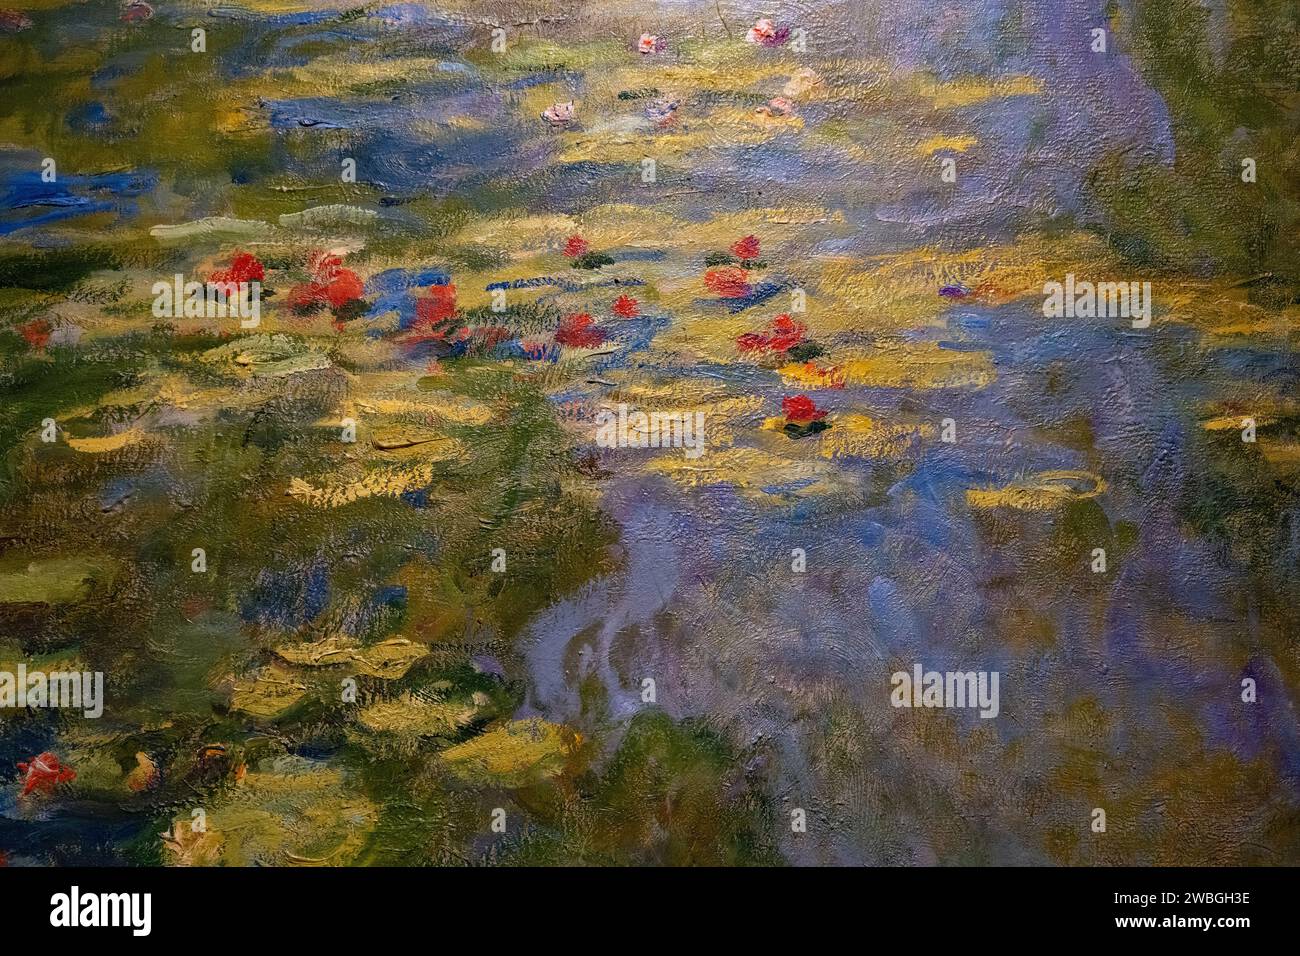 Peinture 'Étang de nénuphars' de Claude Monet de 1917-1919 Banque D'Images